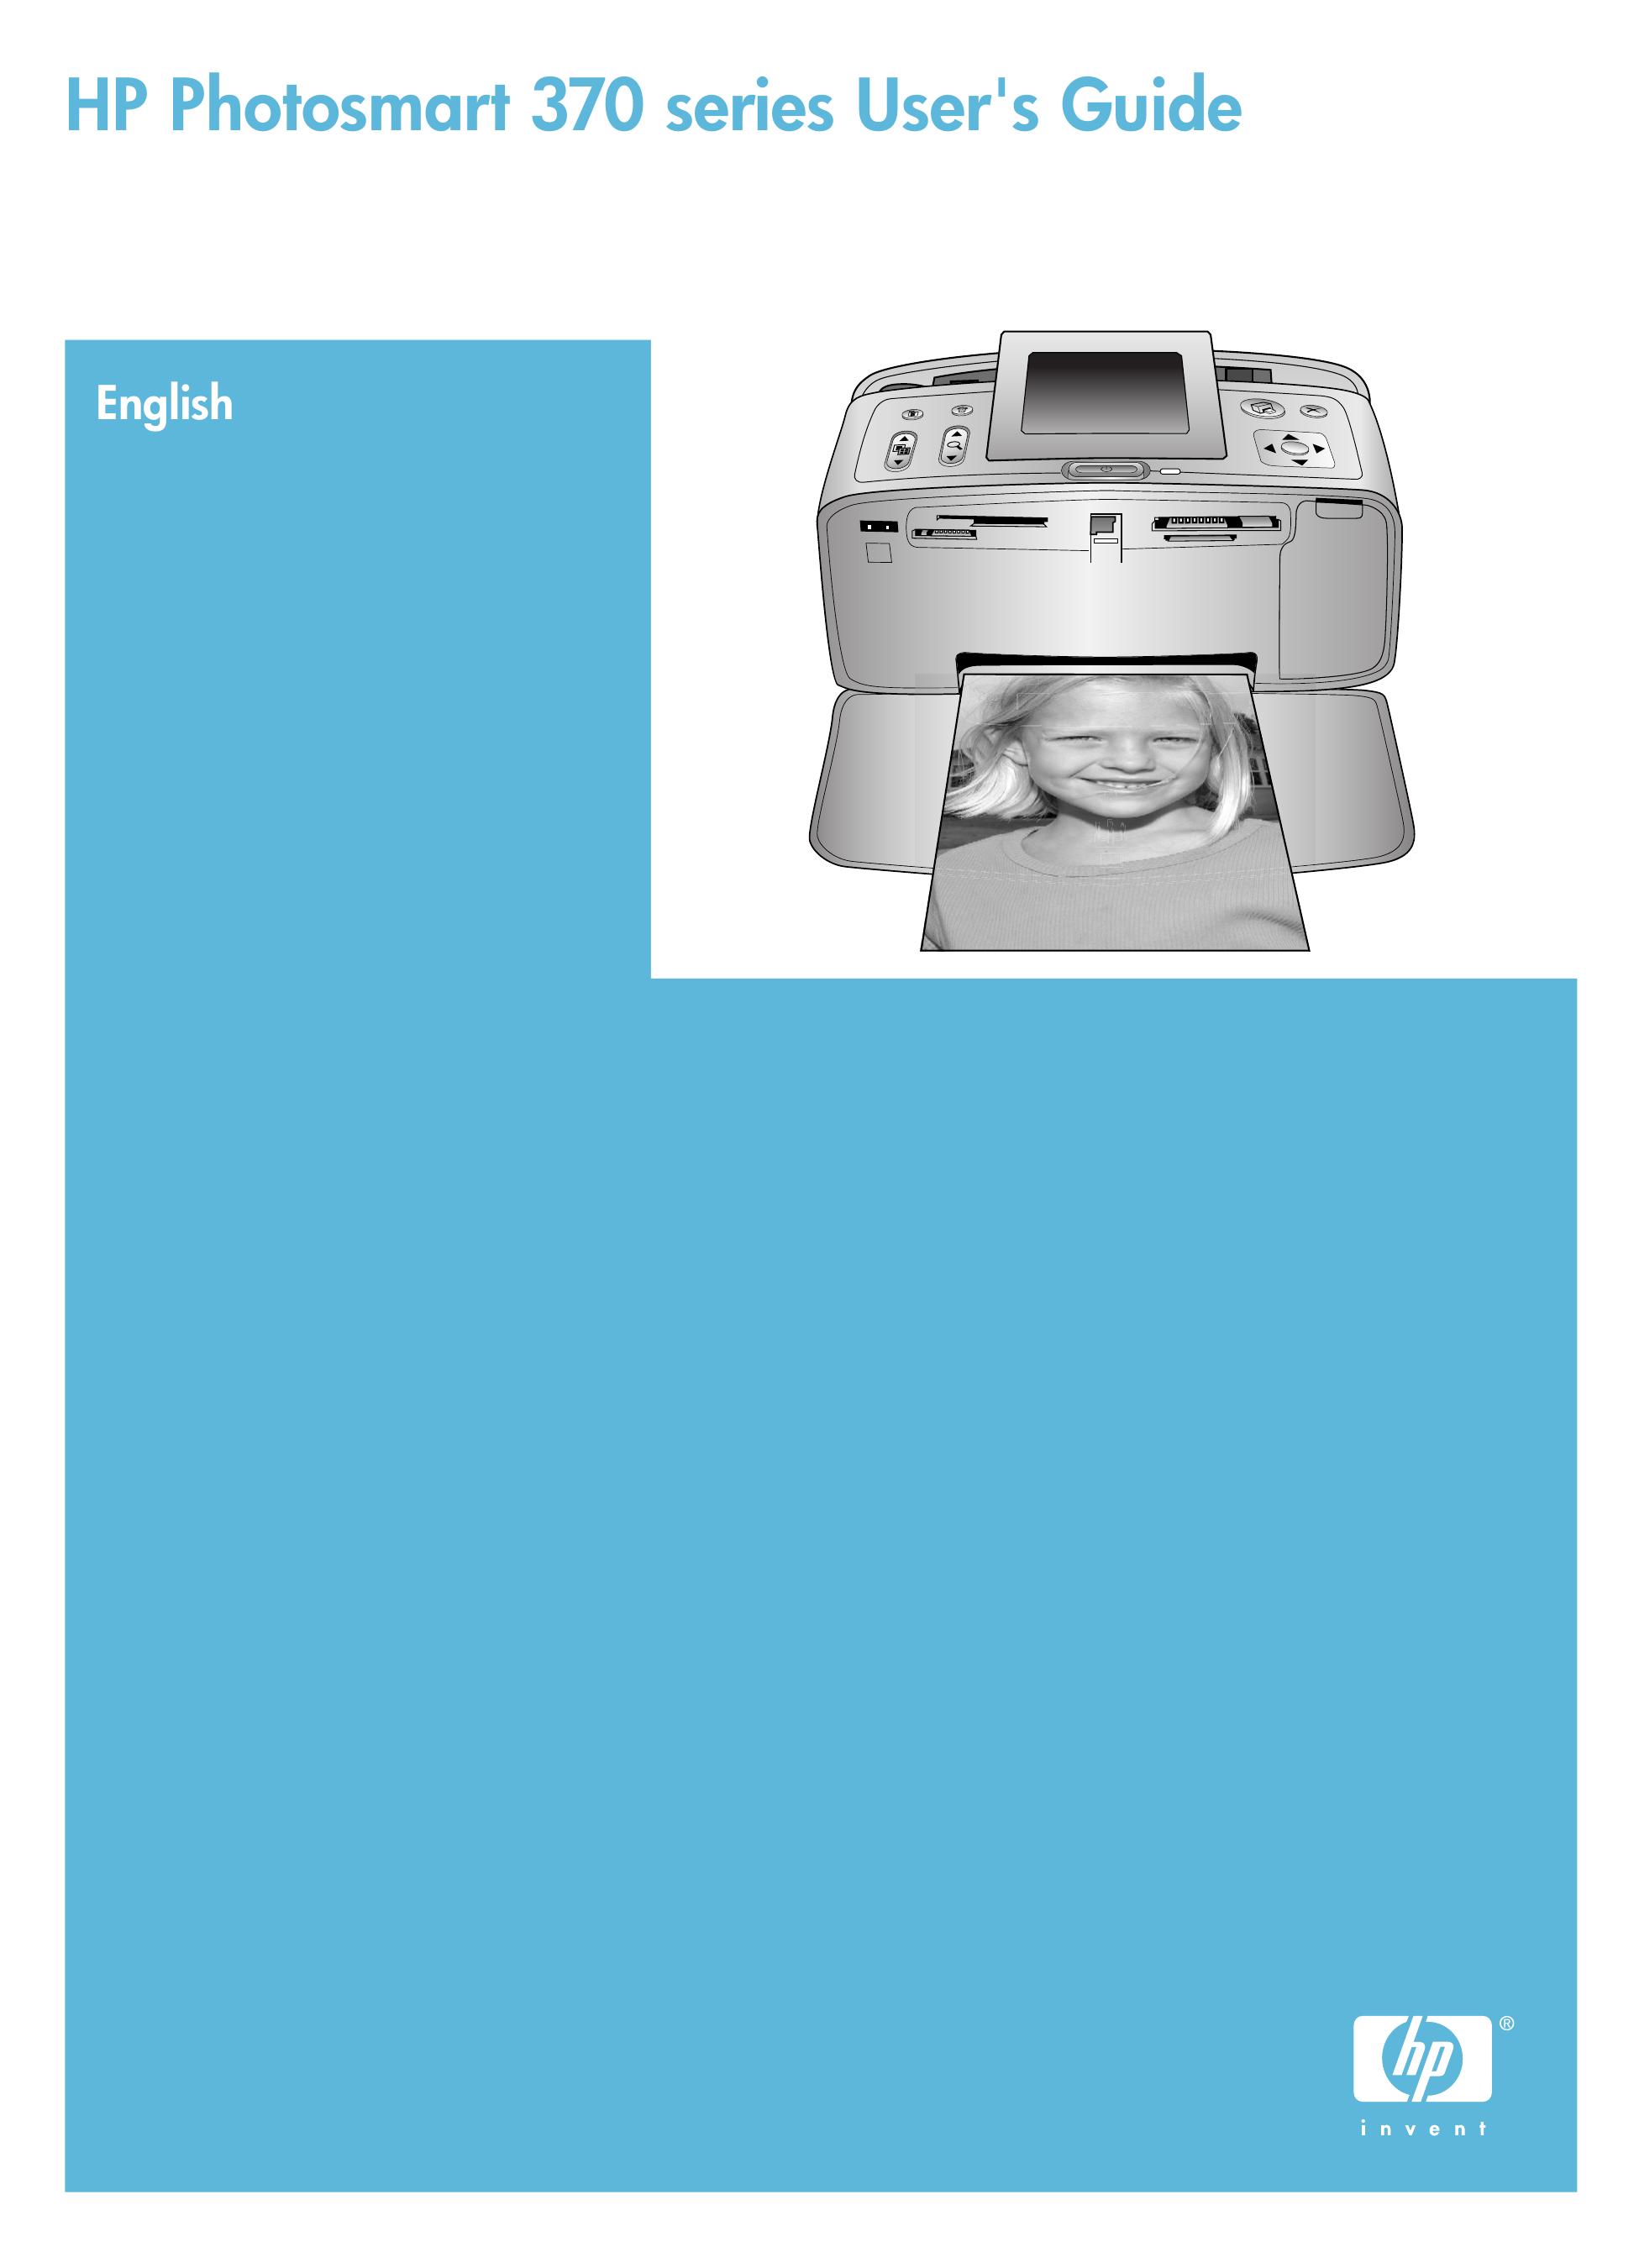 HP (Hewlett-Packard) 370 Series Photo Printer User Manual